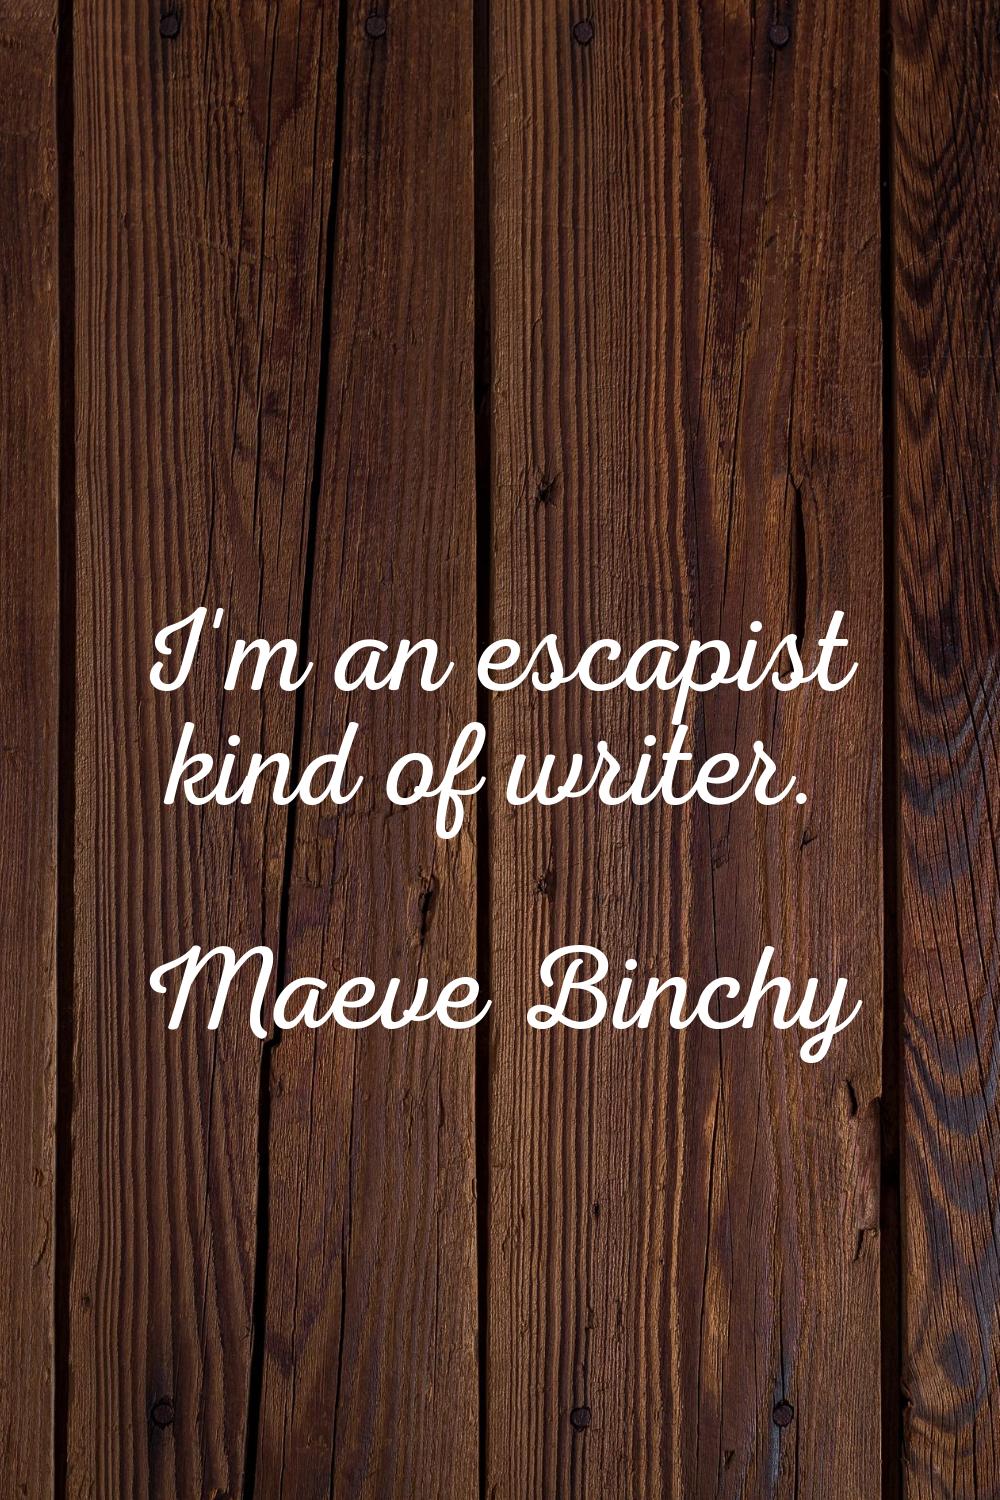 I'm an escapist kind of writer.